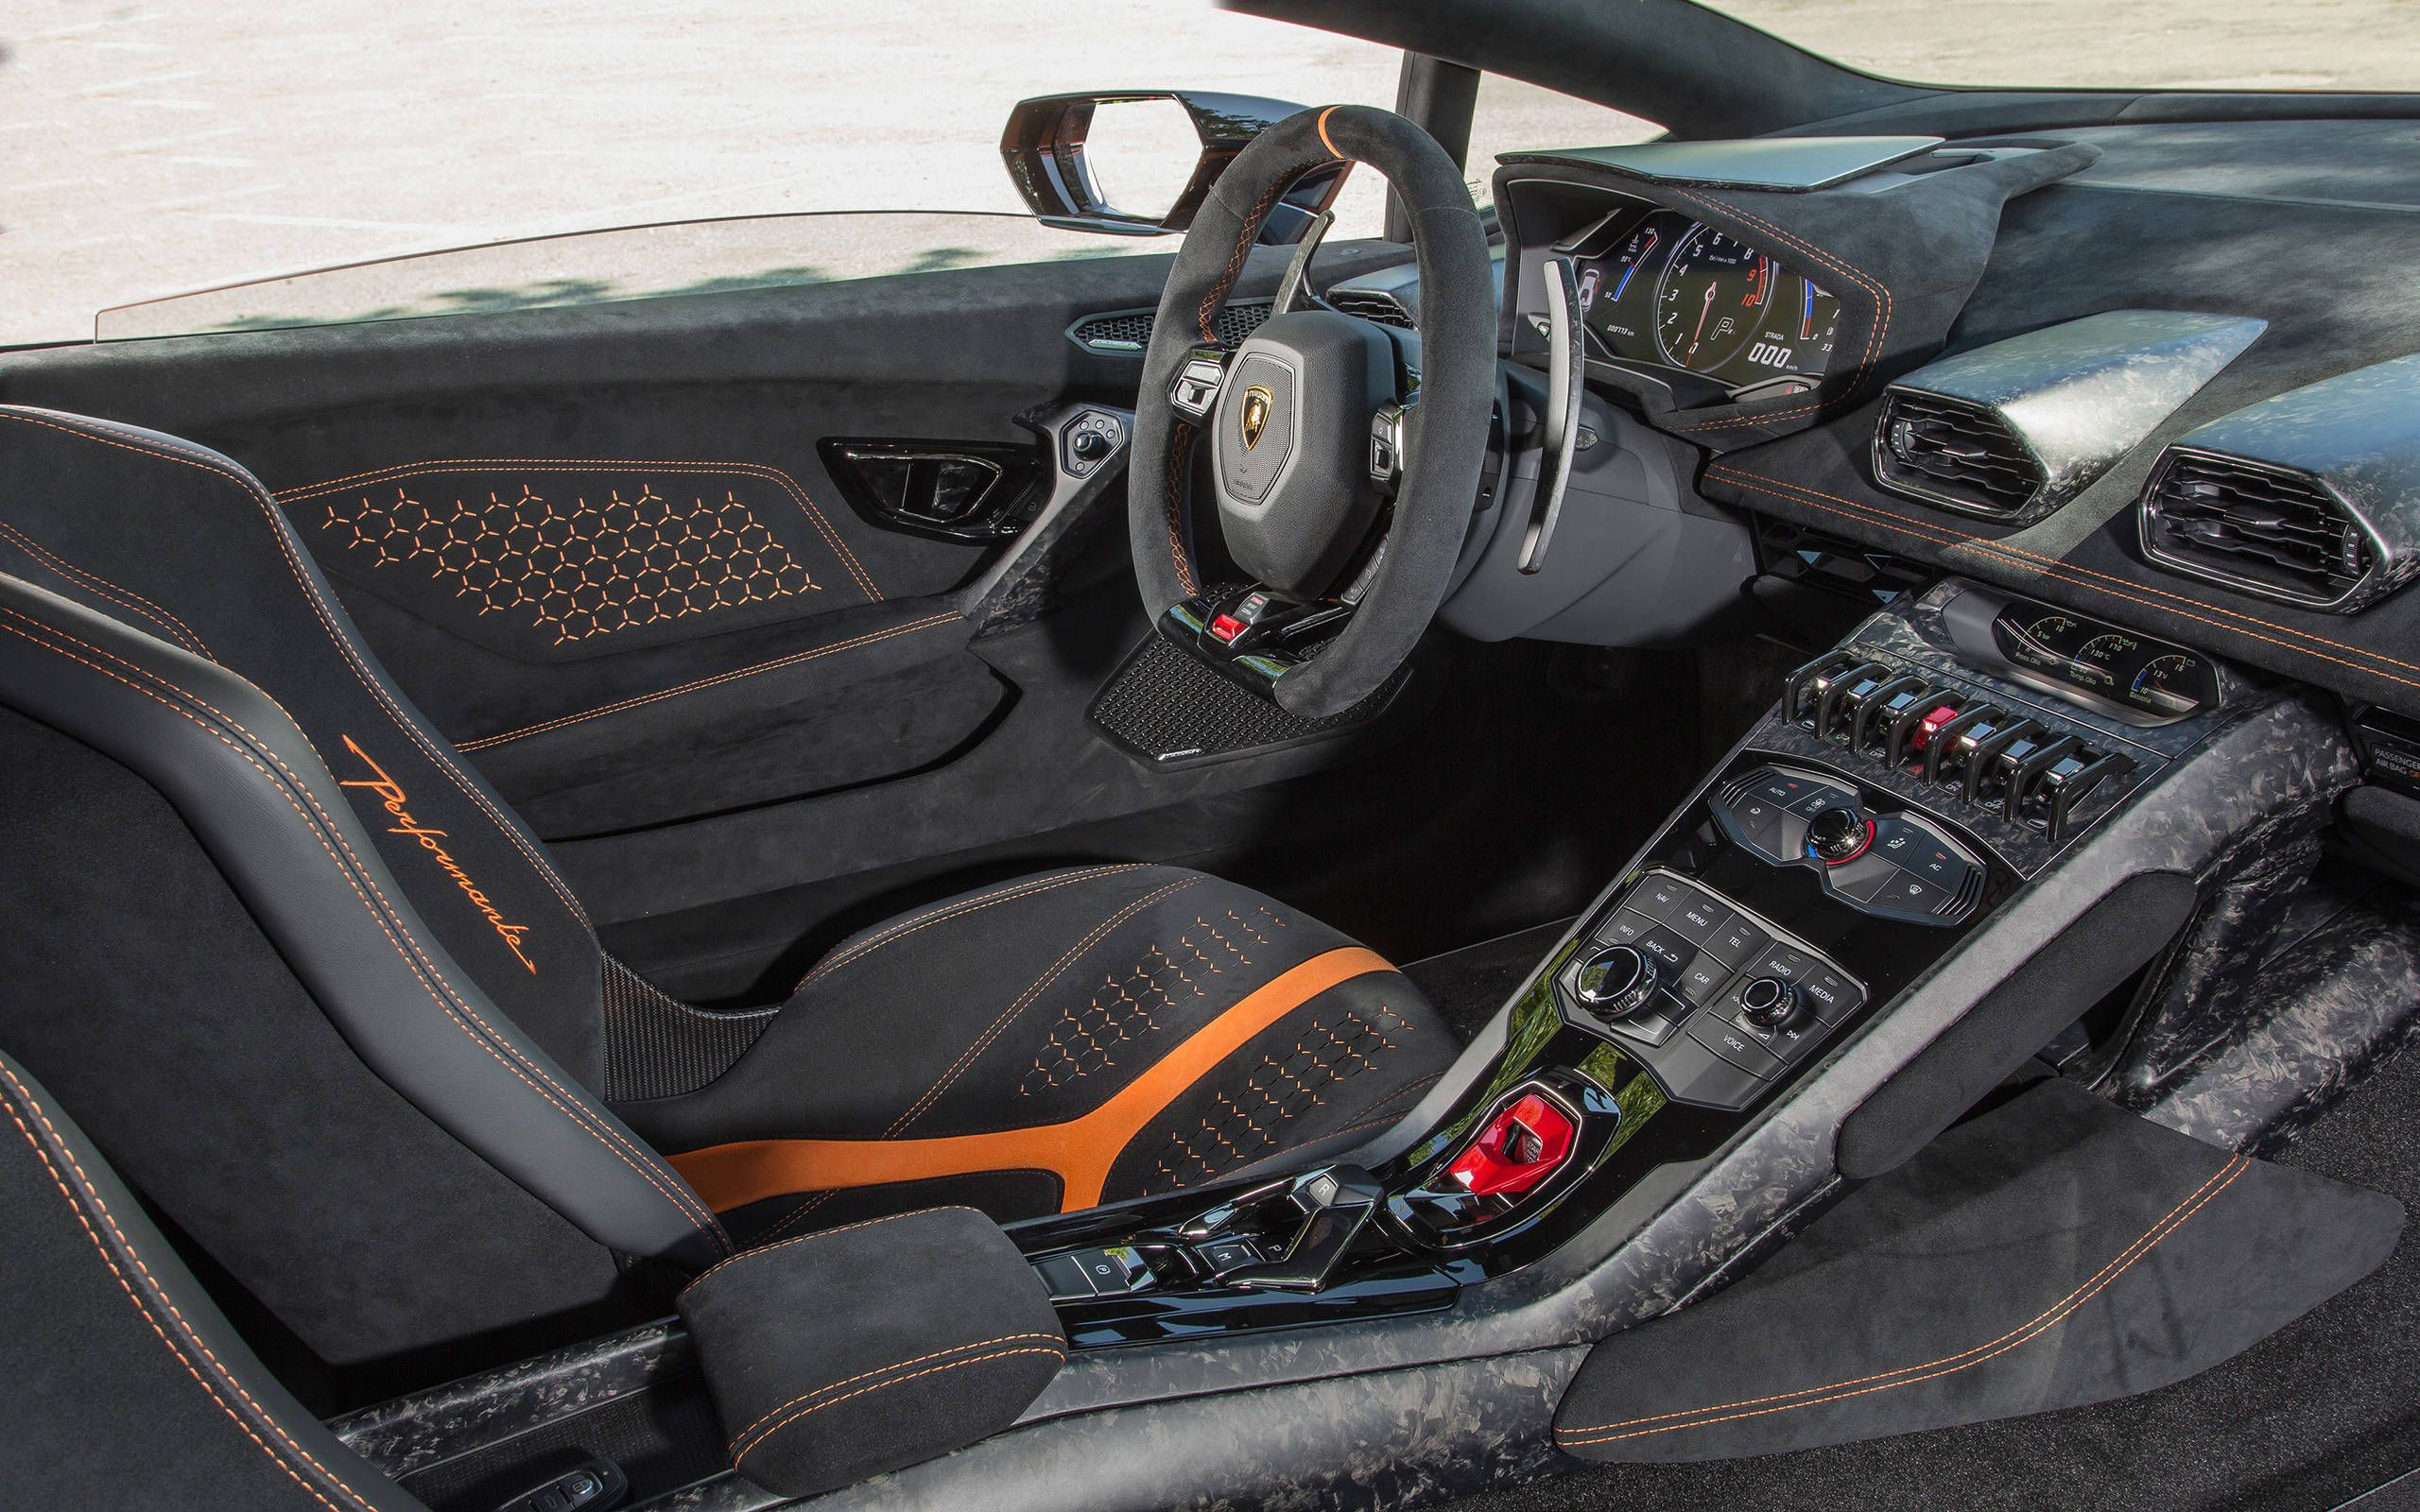 Gallery: Lamborghini Huracan Performante interior